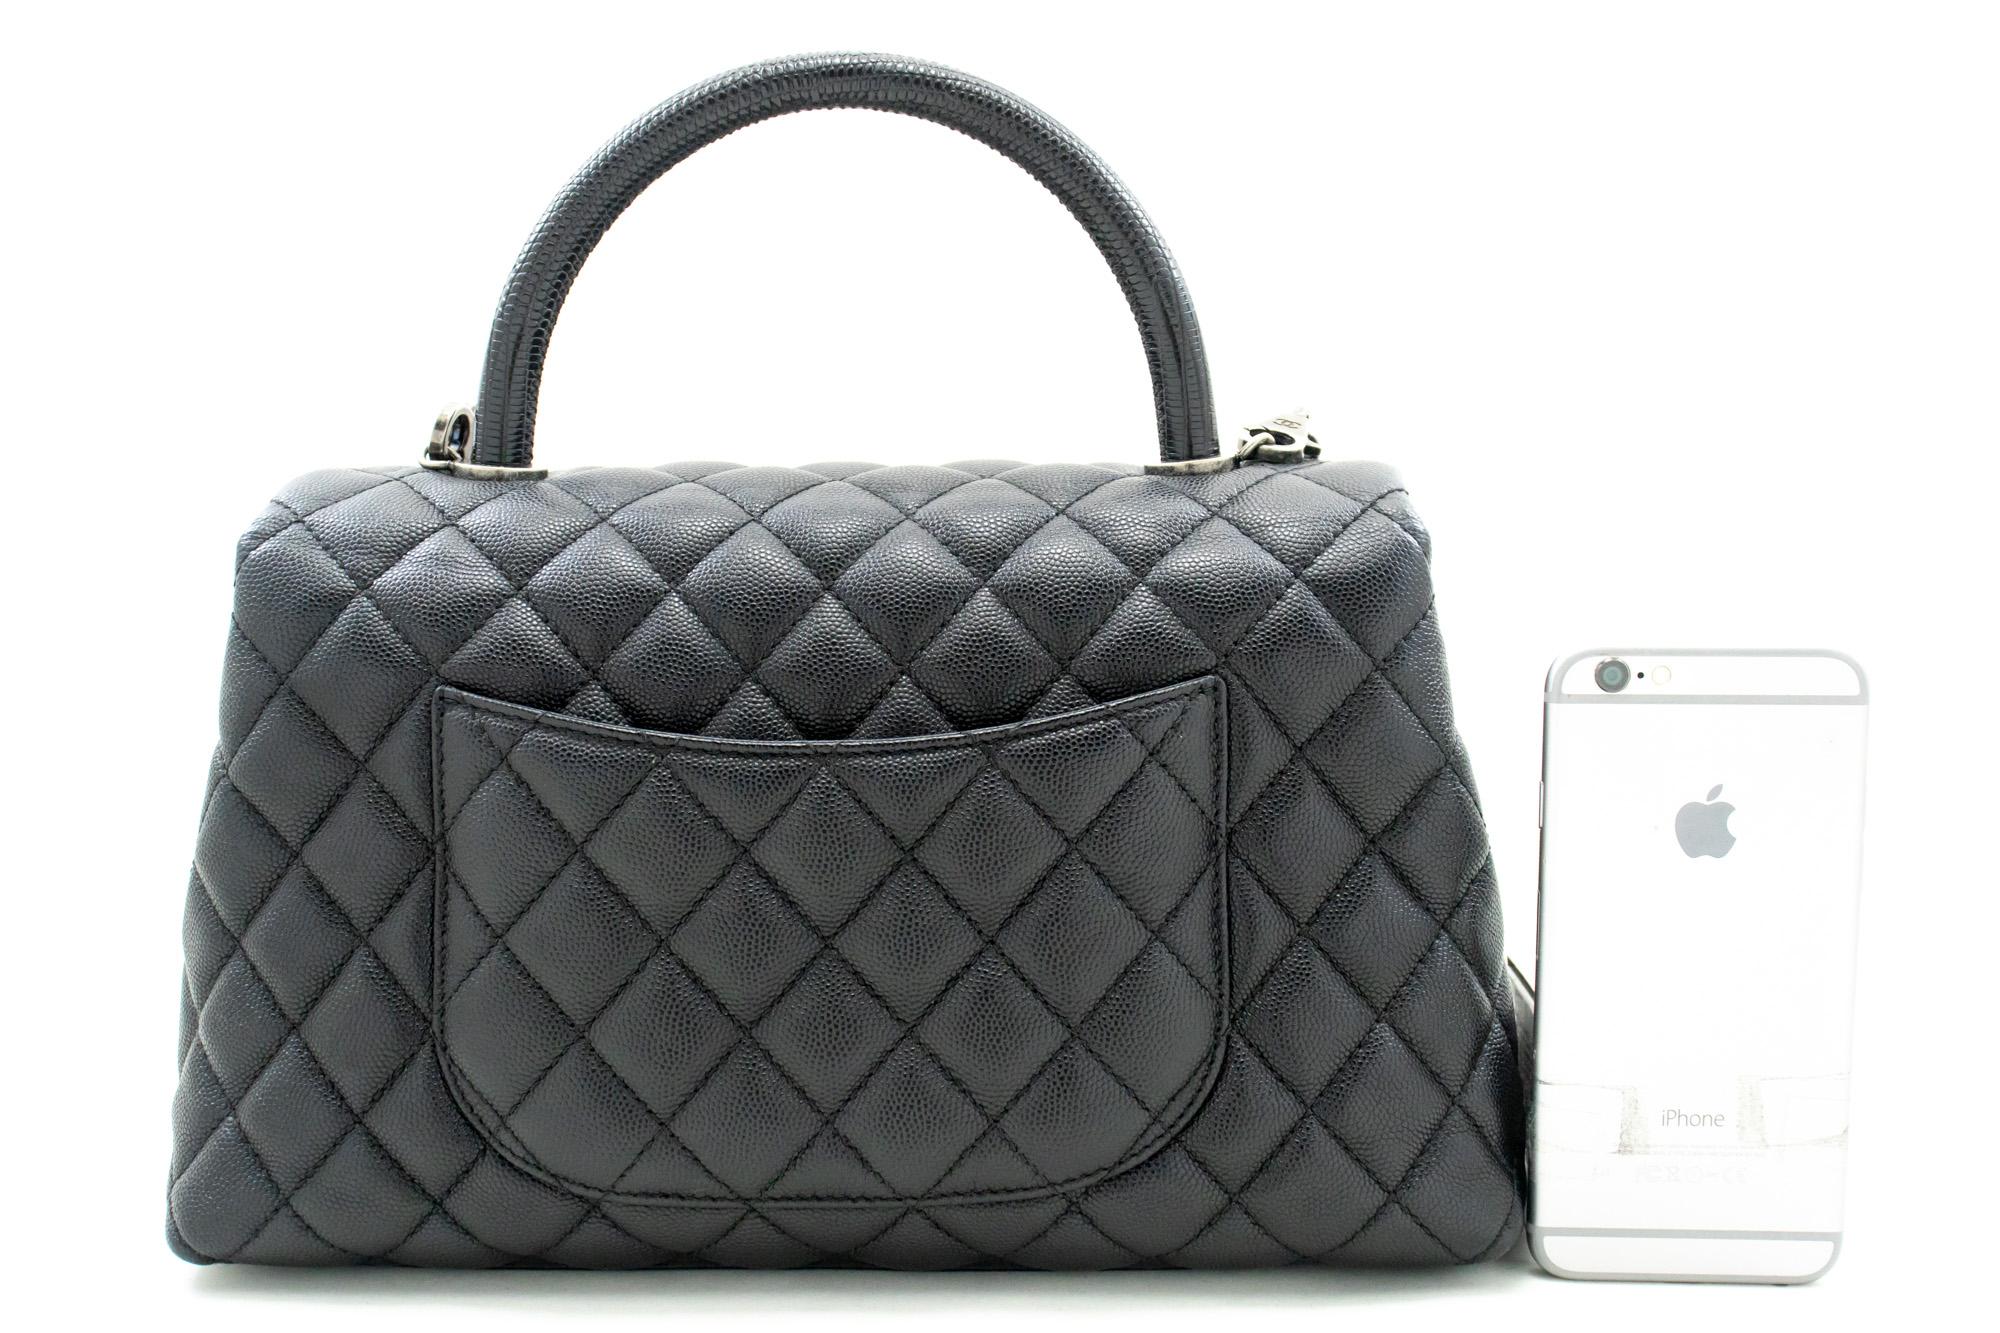 CHANEL 2 Way Top Handle Shoulder Bag Handbag Black Caviar Leather In Excellent Condition For Sale In Takamatsu-shi, JP